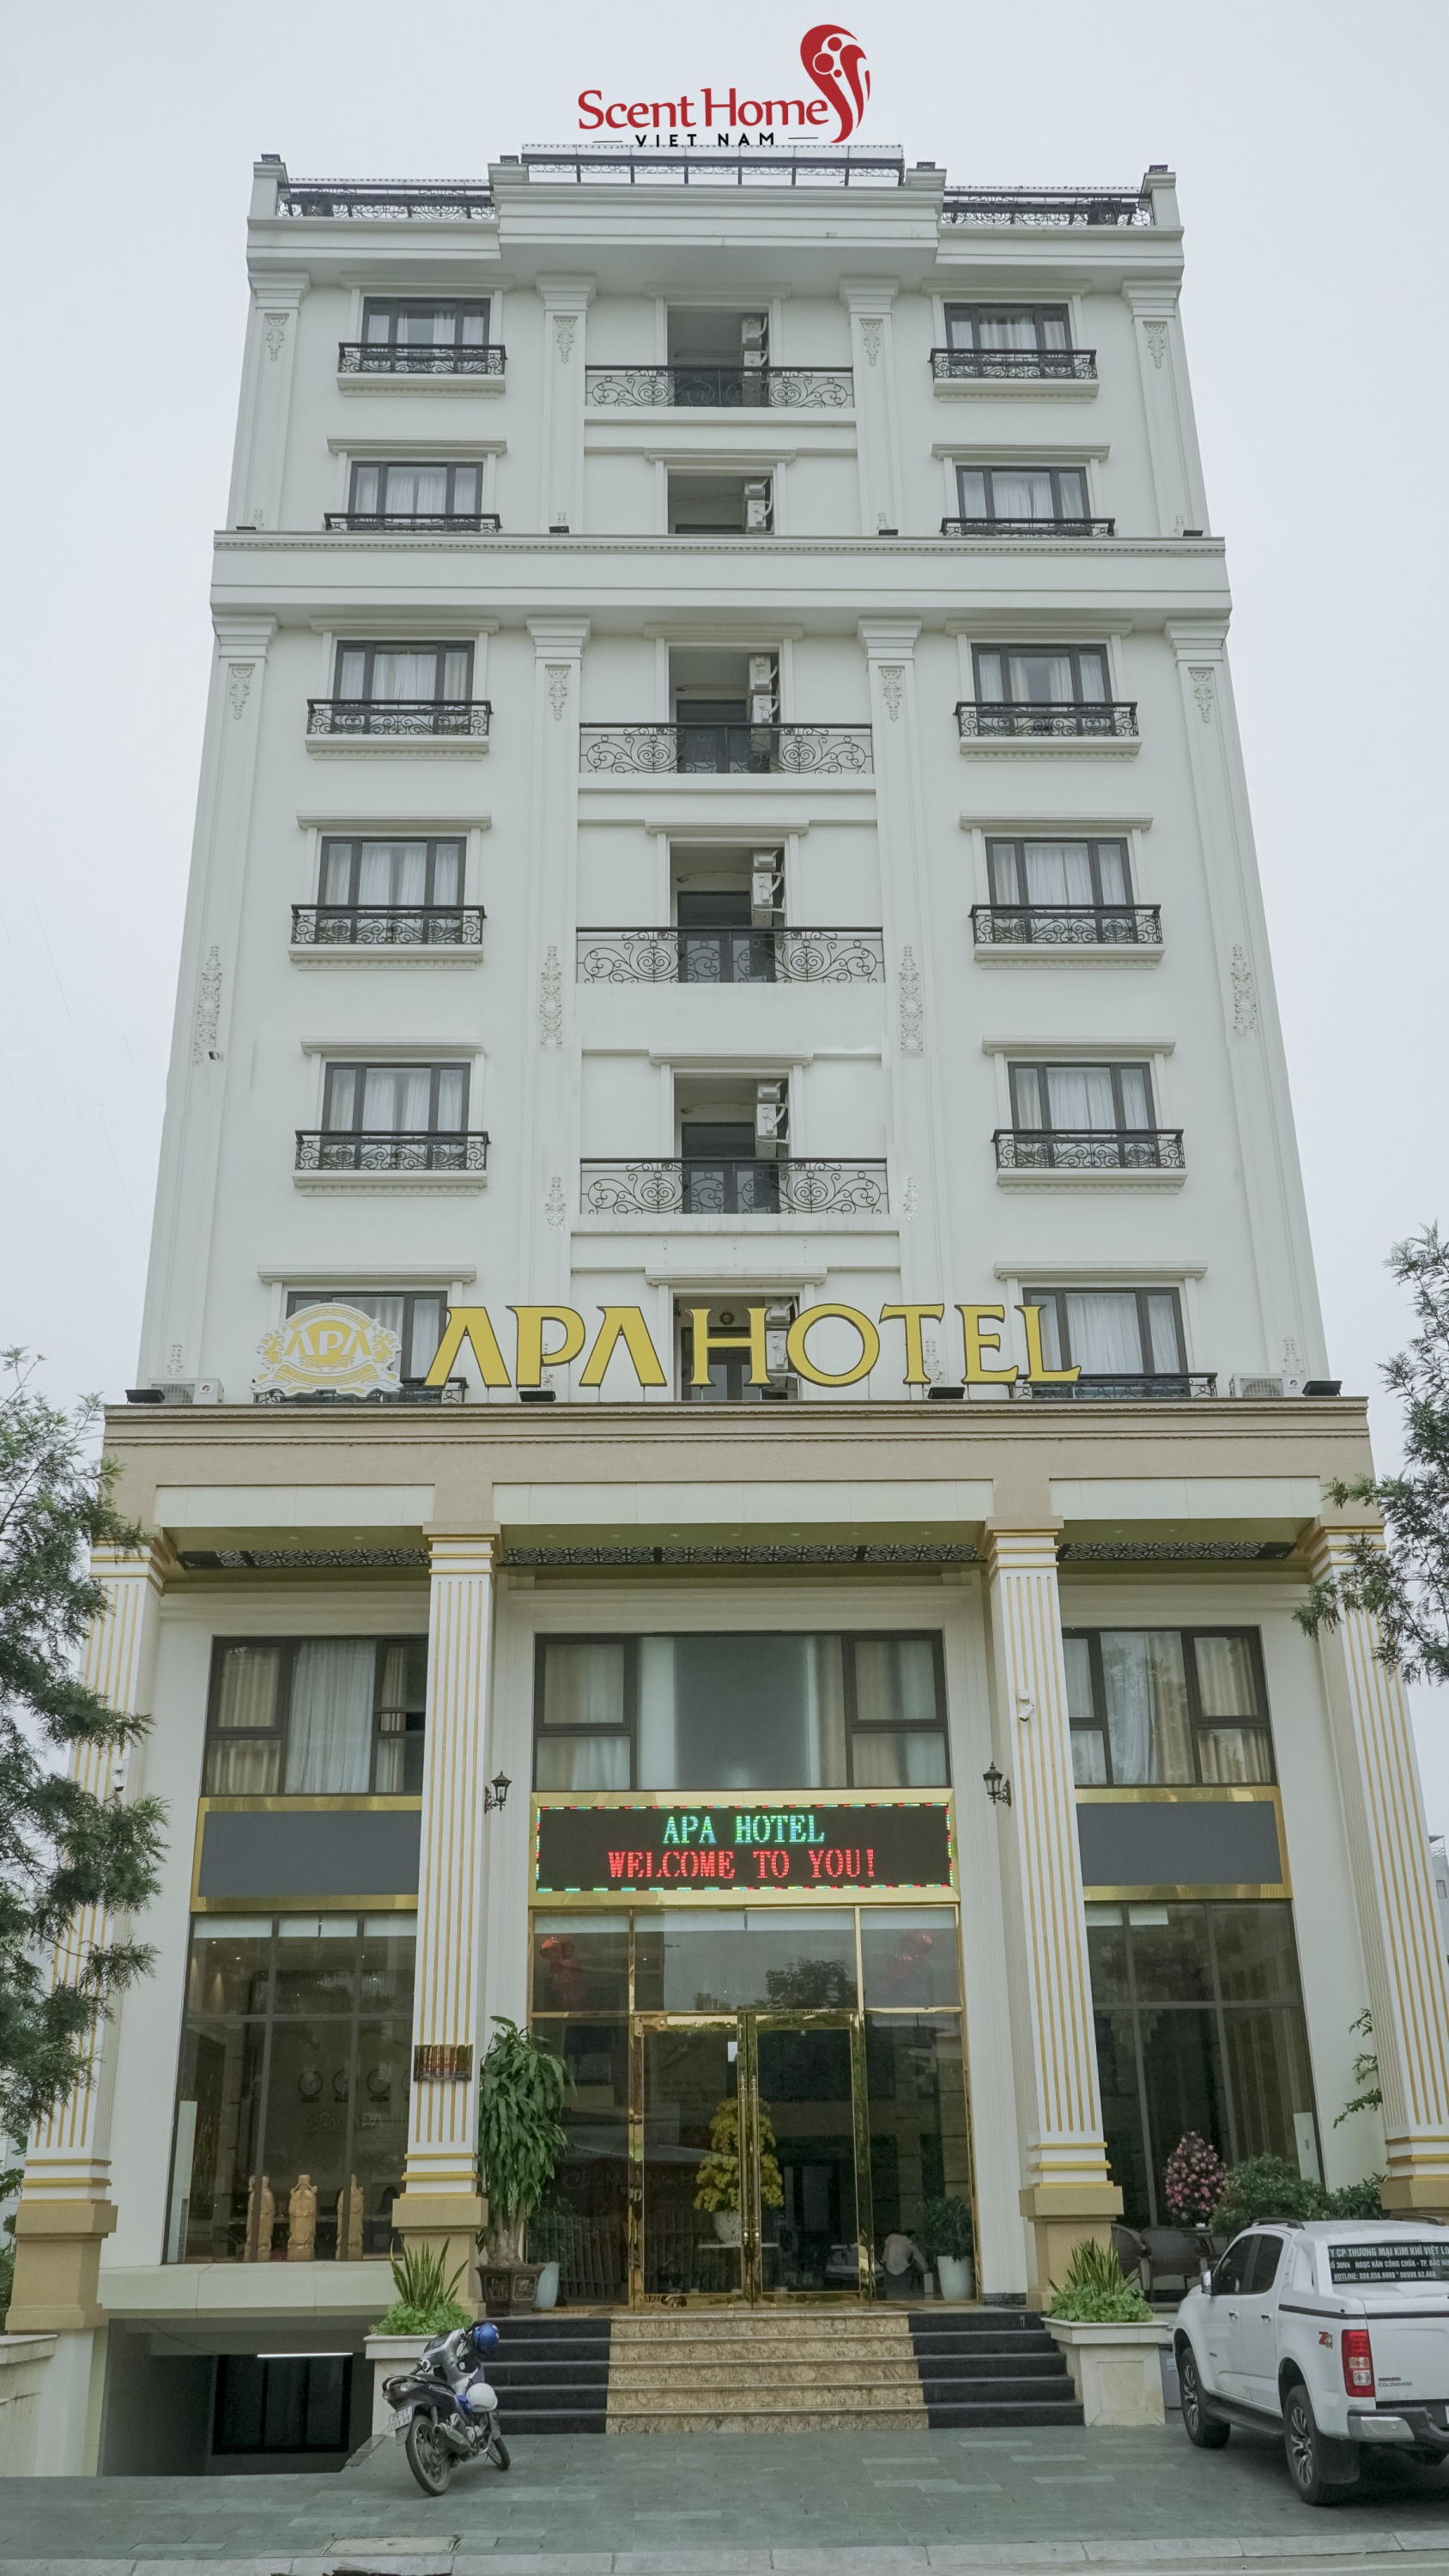 APA Hotel